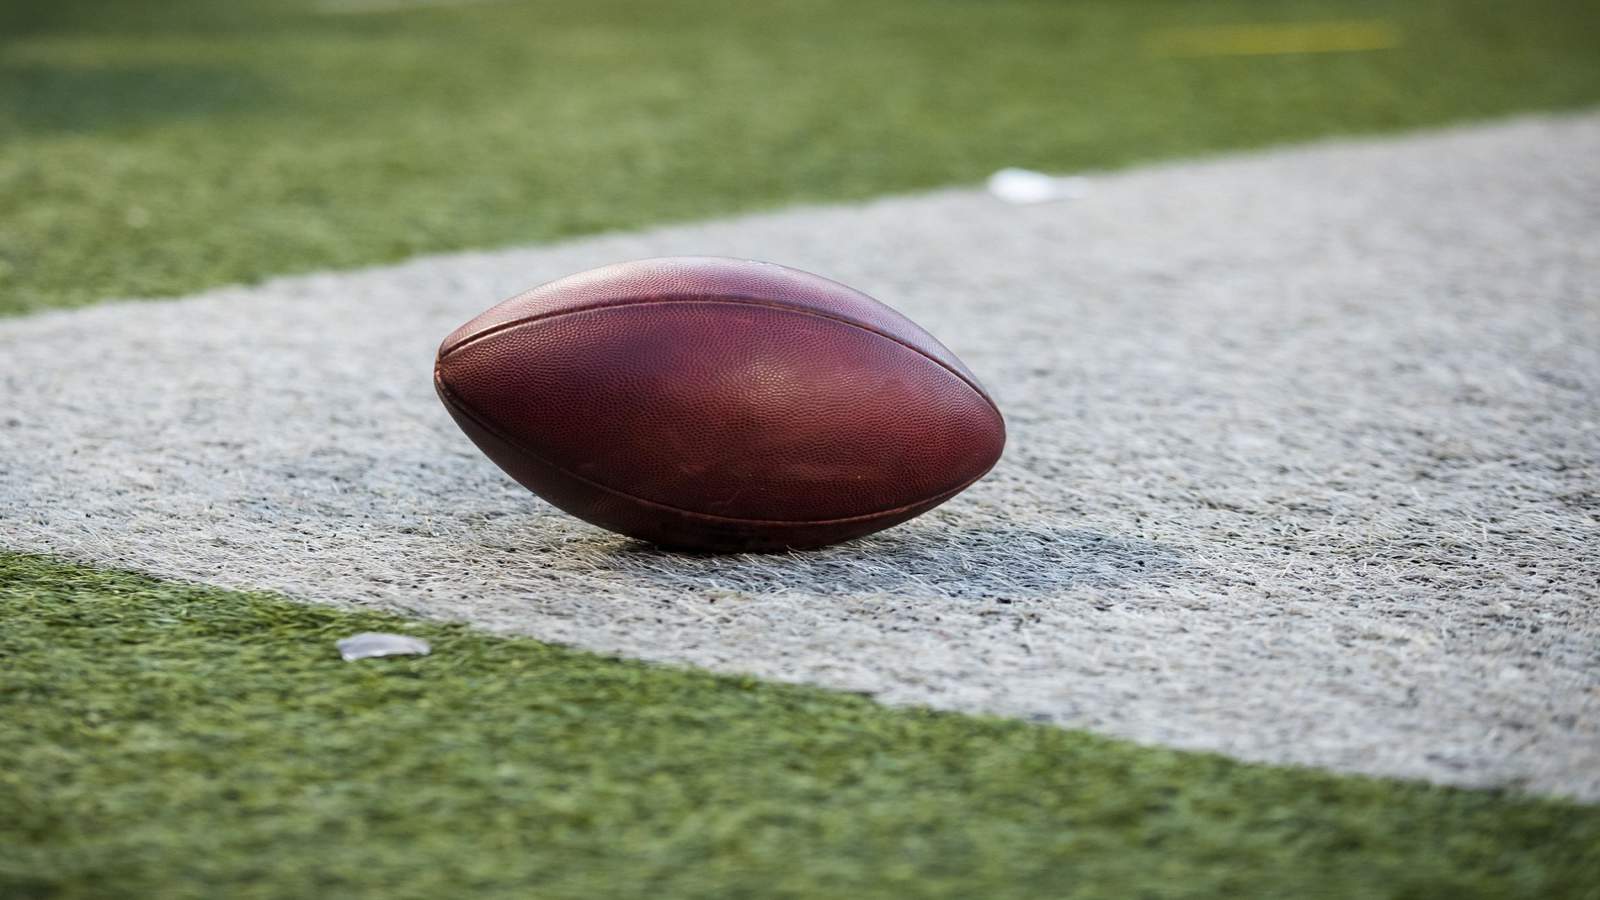 Big Ten football could exclude University of Michigan, Michigan State this season, Trump tweets